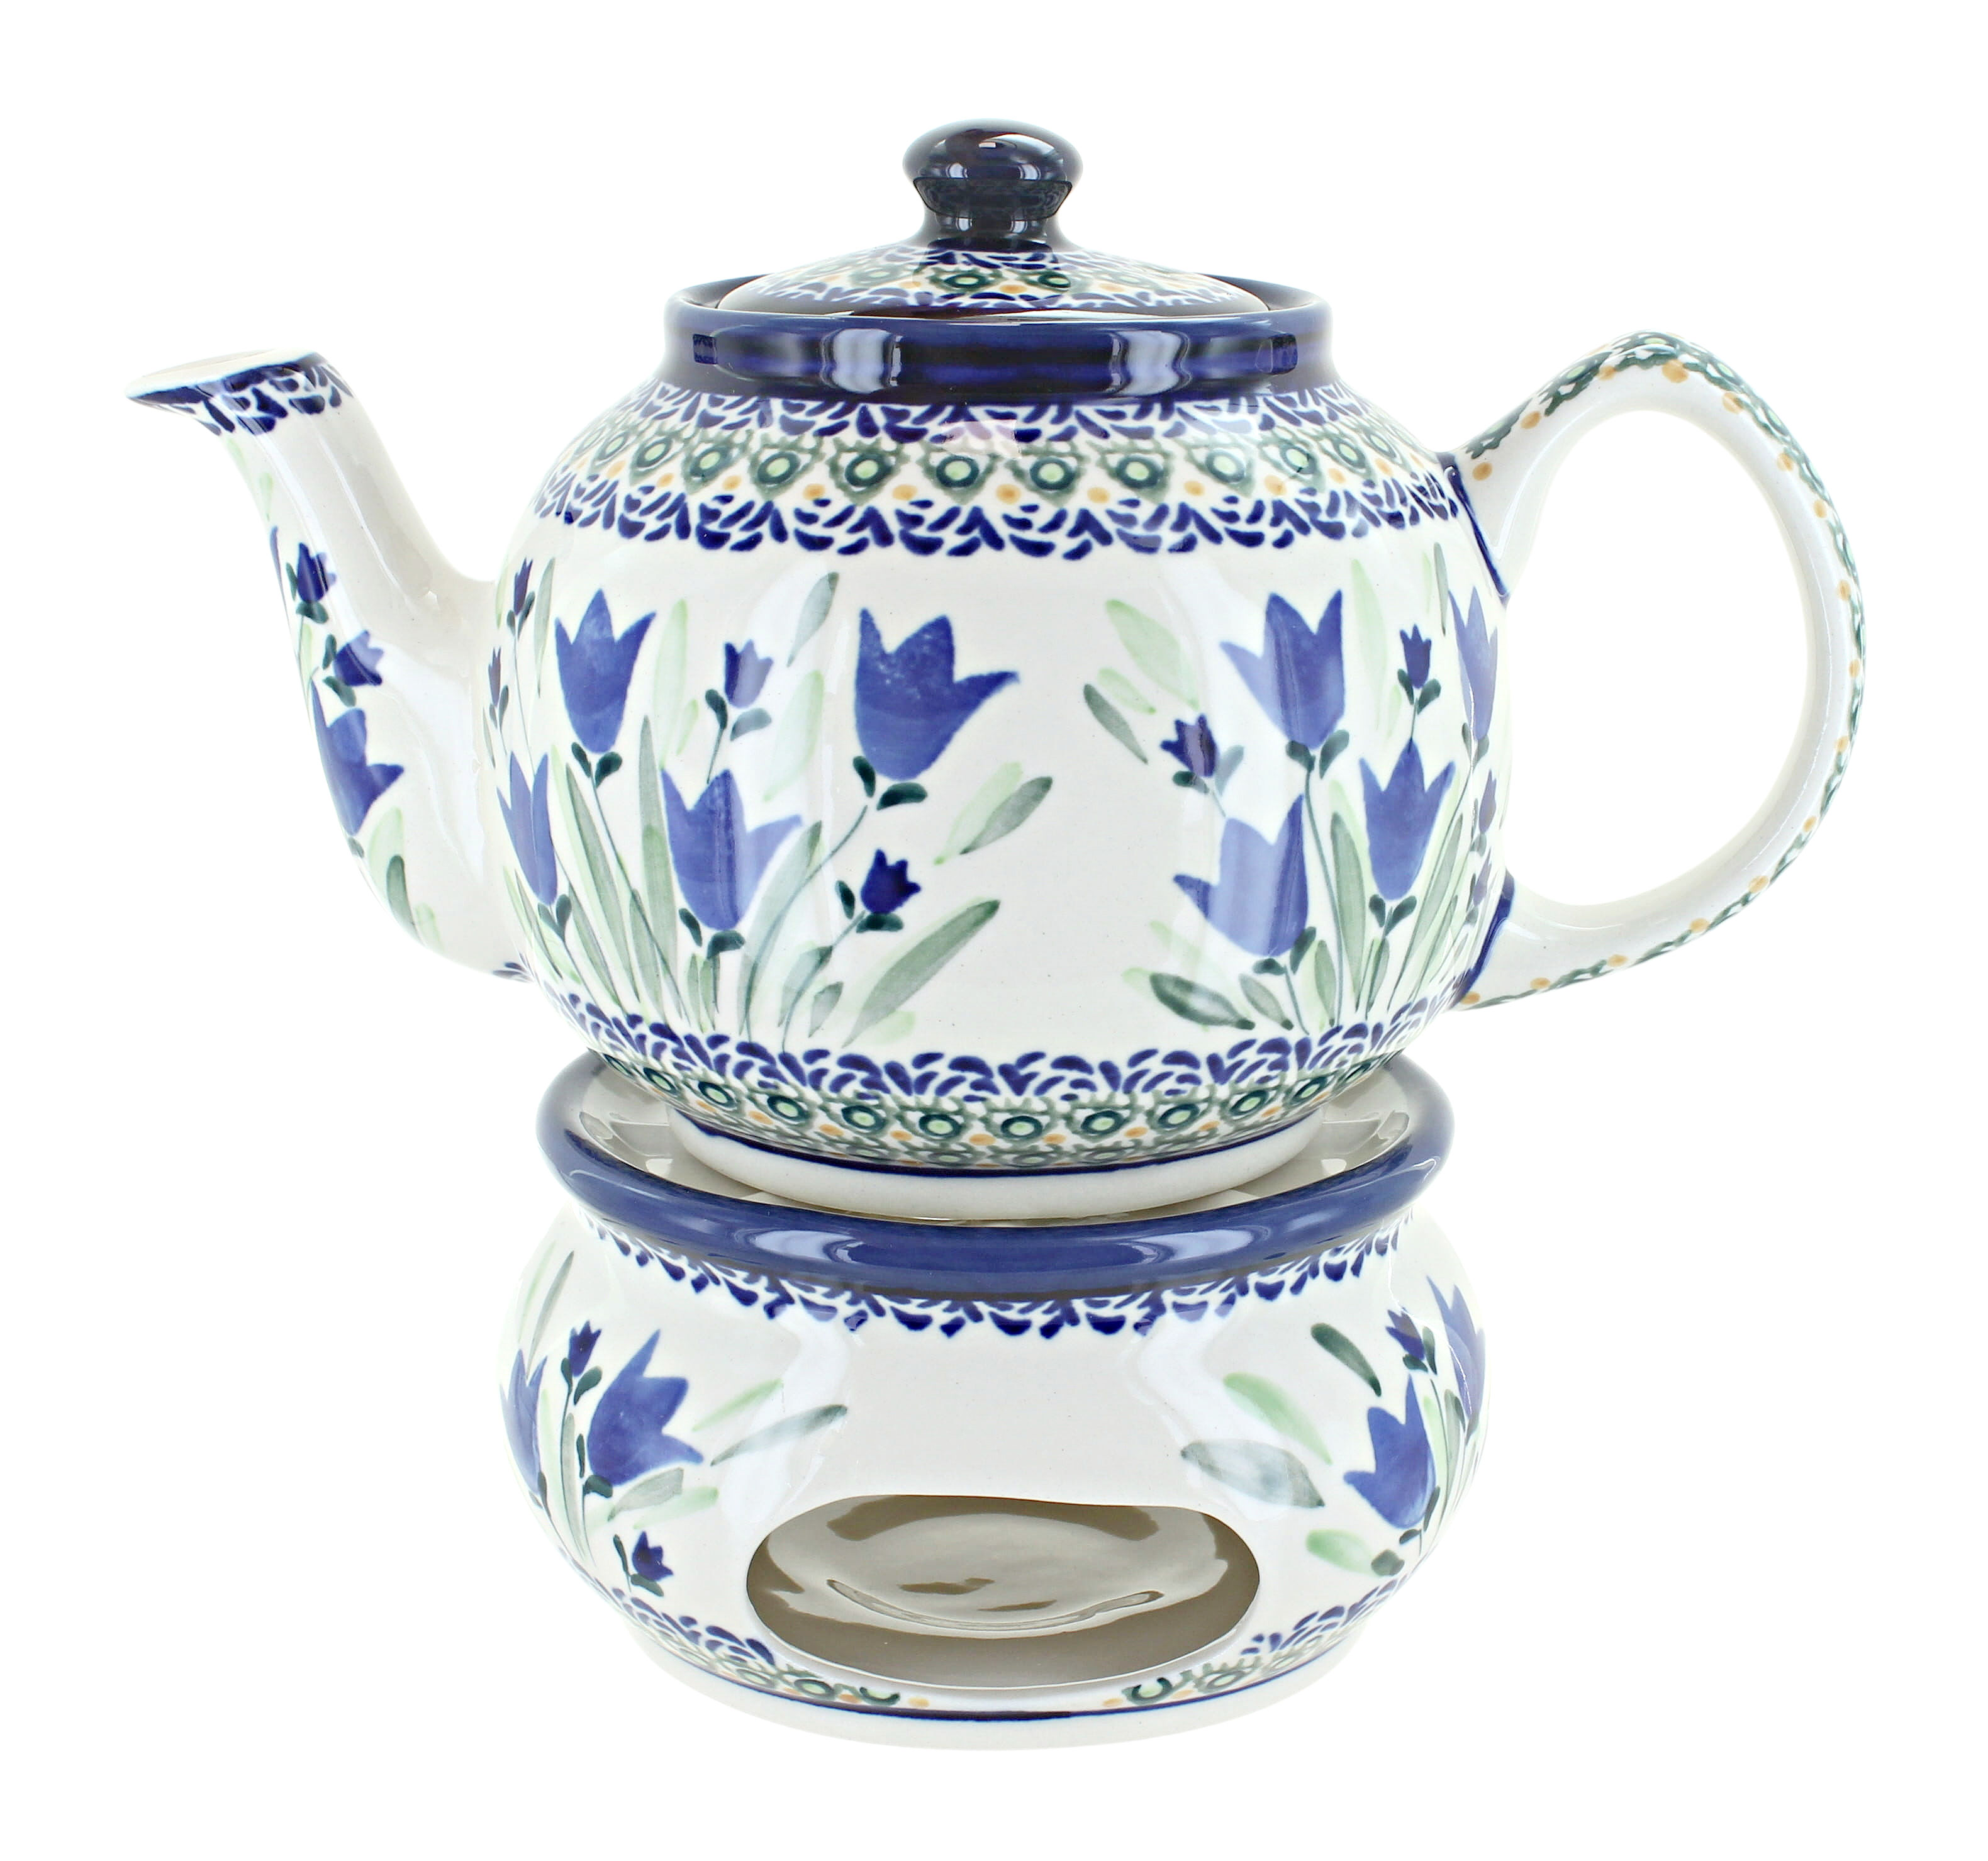 Porcelain and cork teapot warmer support